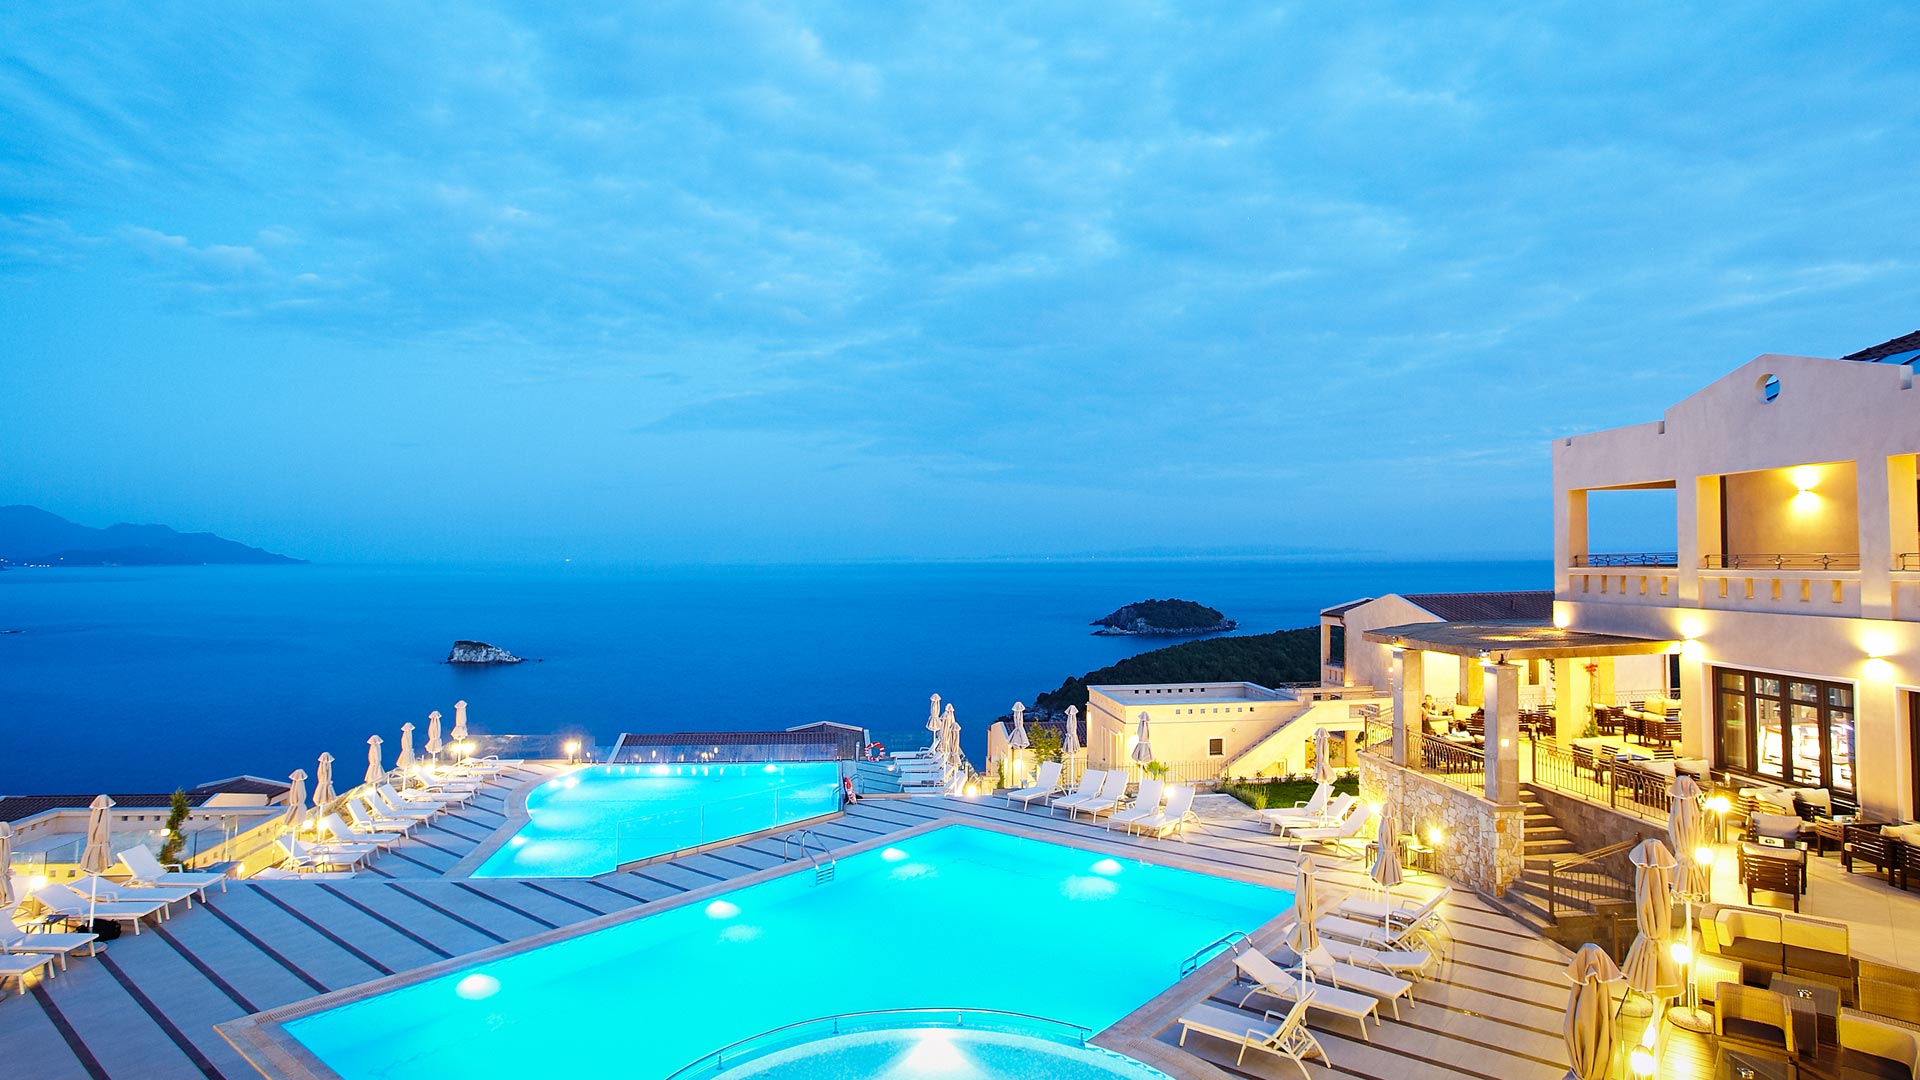 greece wallpaper hd,resort,swimming pool,property,vacation,building